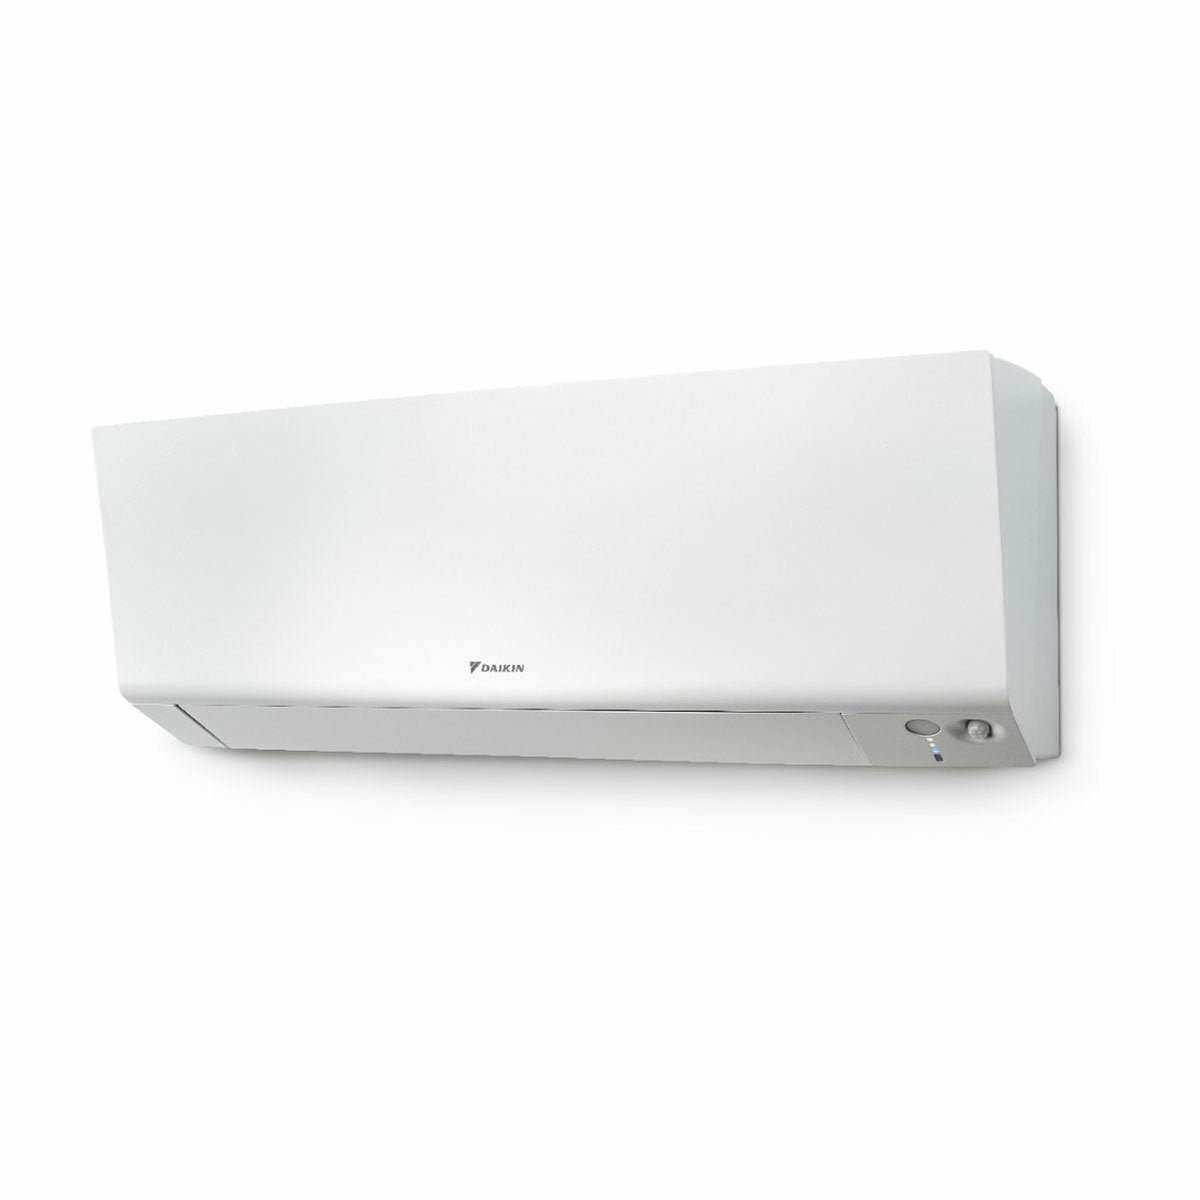 Daikin Perfera Wall 7000 BTU R32 air conditioner A +++ inverter with integrated wi-fi